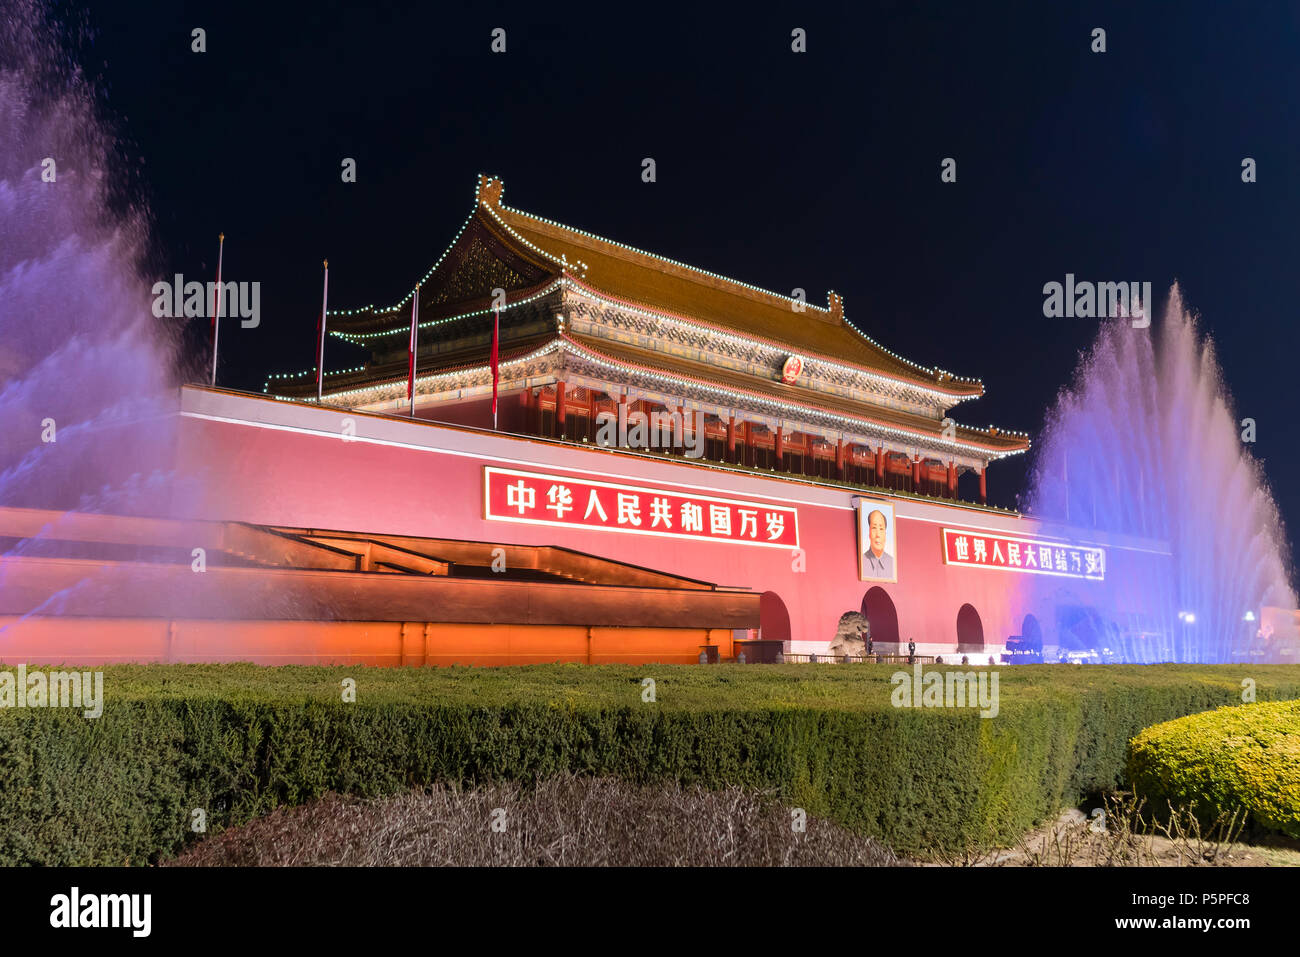 Tiananmen in Beijing at night Stock Photo